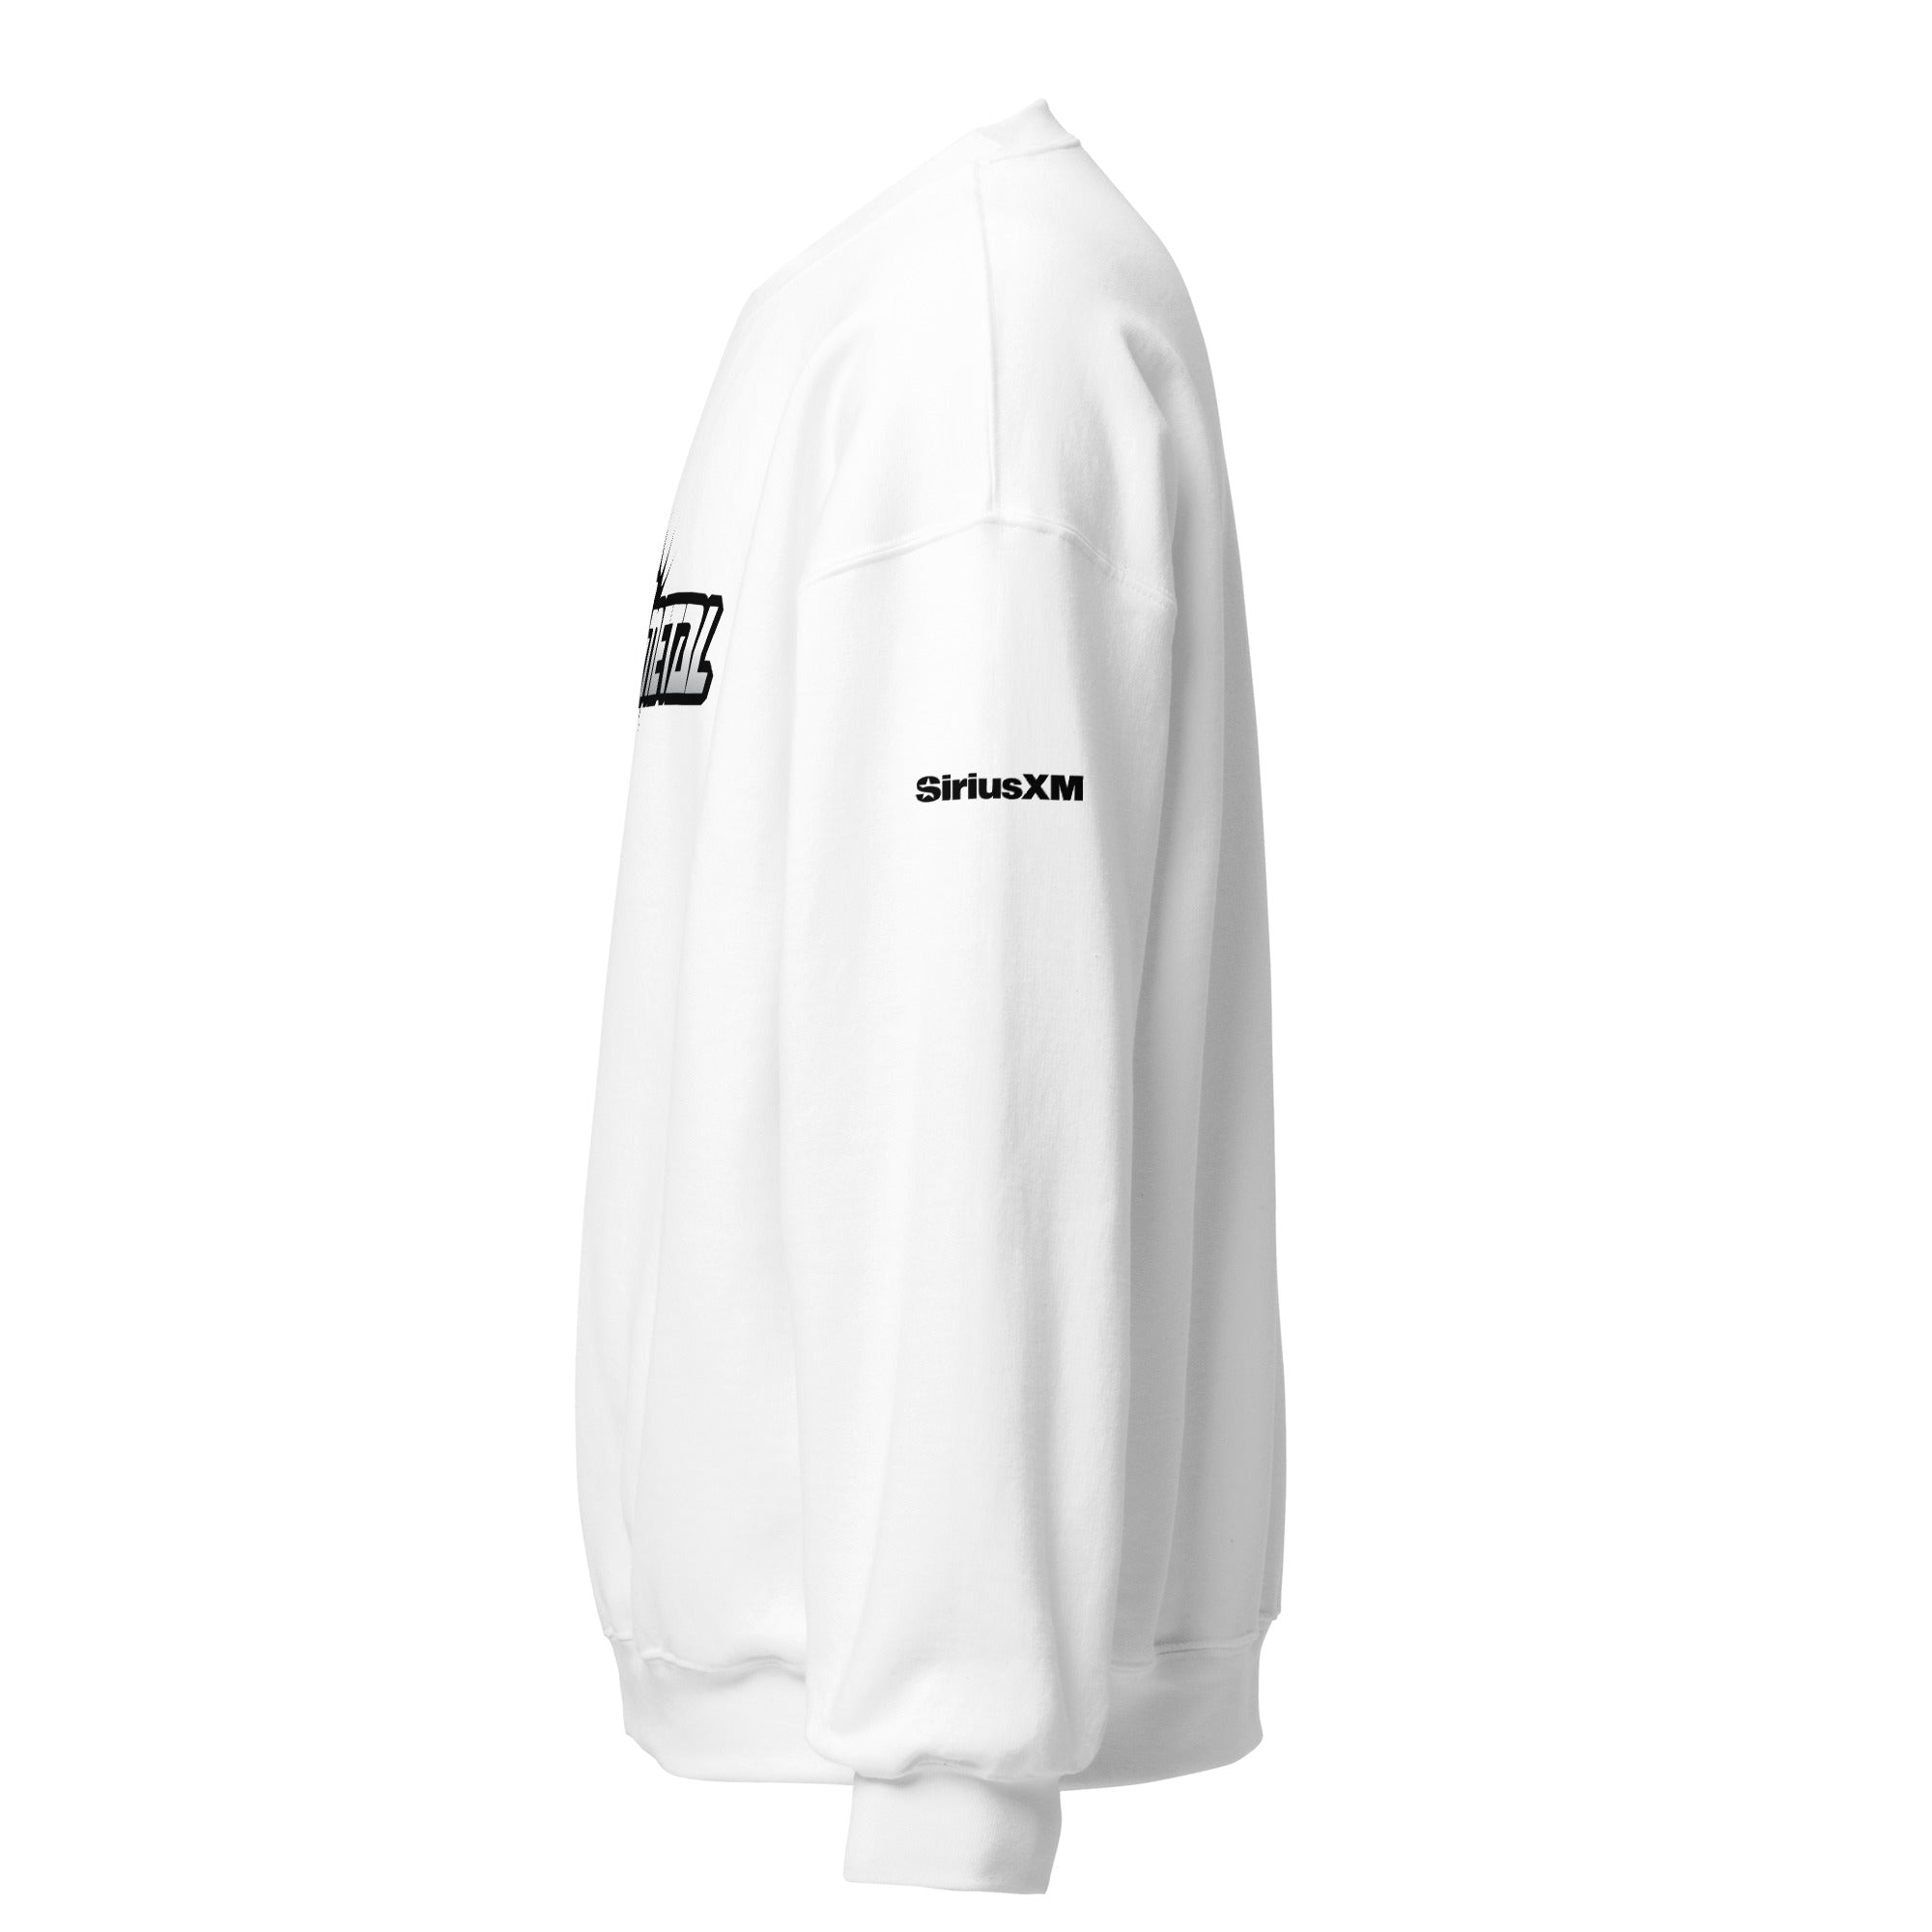 Liquid Metal: Sweatshirt (White)